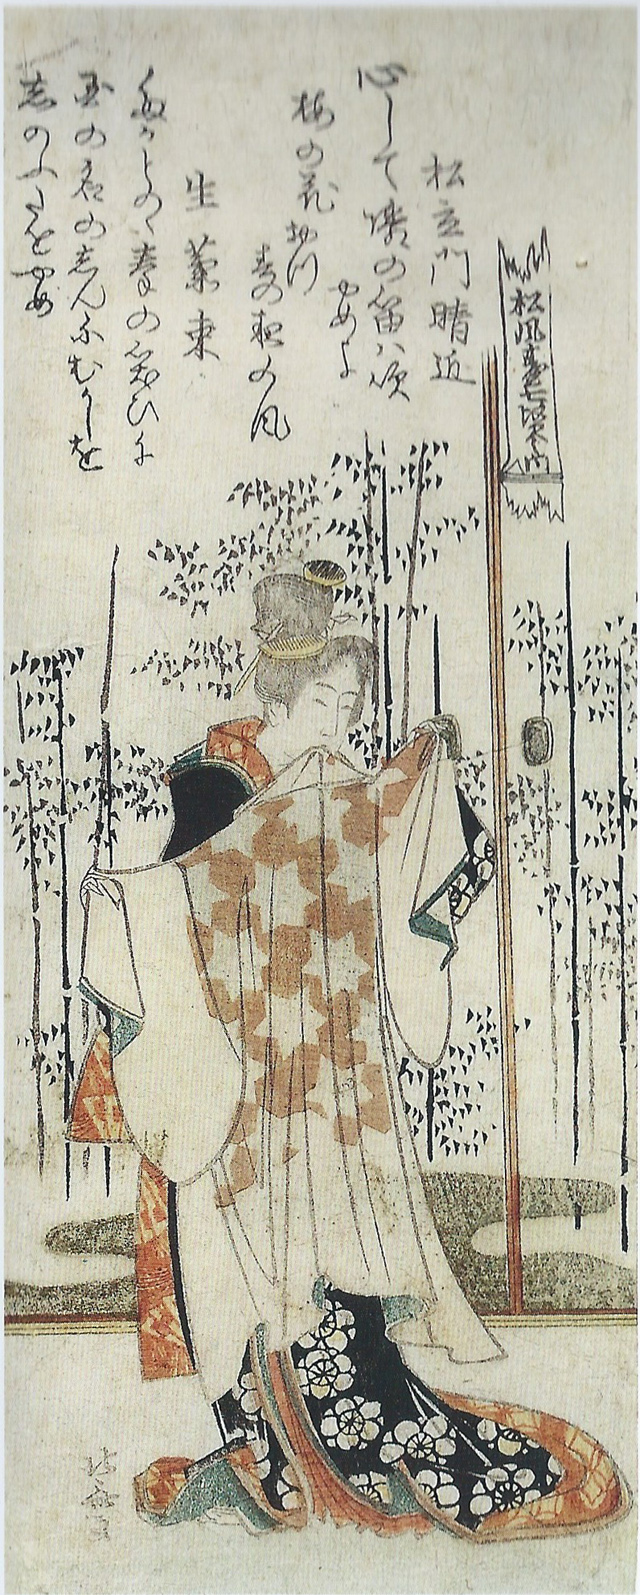 Hokusai - A Beauty Holding a Robe - 7 Sages for the Shofudai